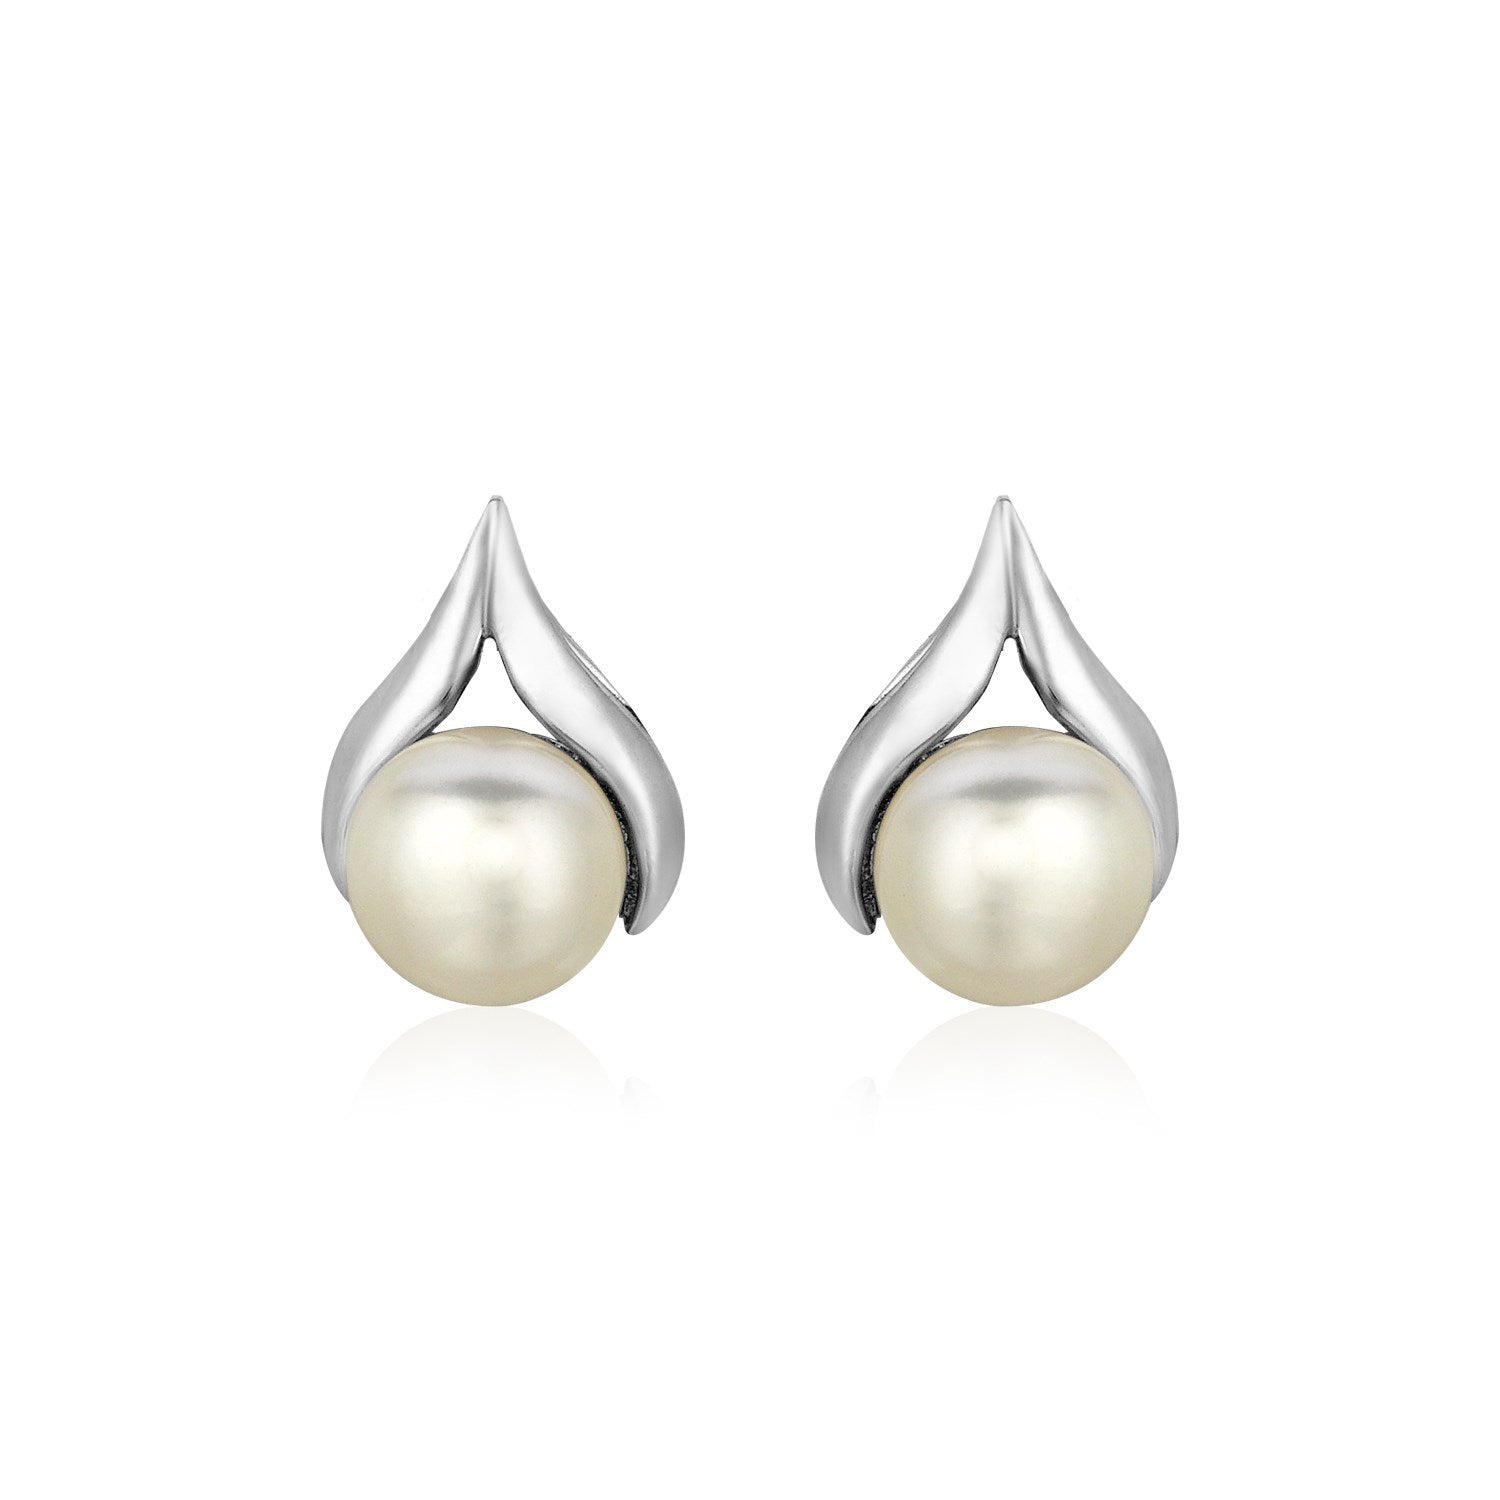 Sterling Silver Leaf Motif Earrings with Freshwater Pearls